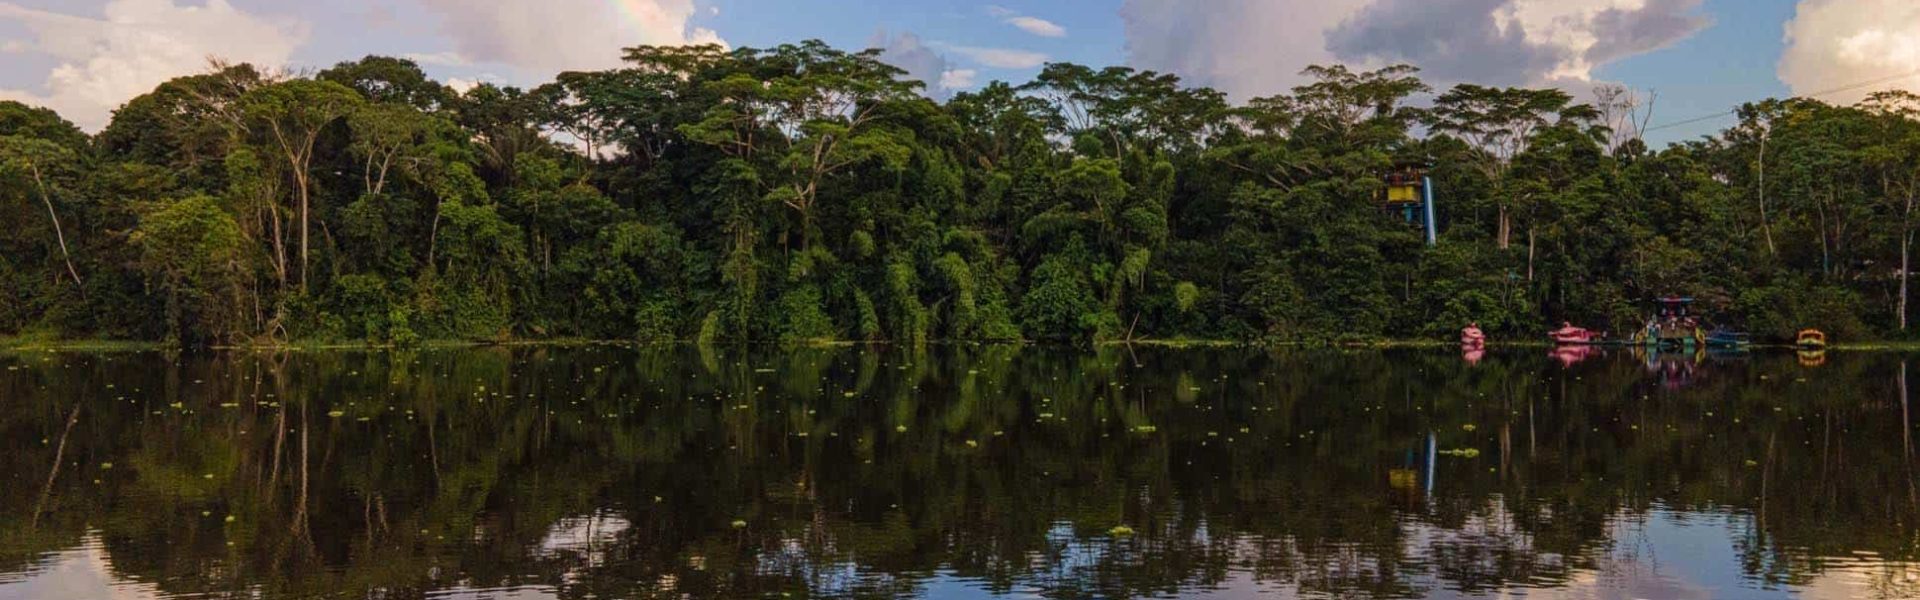 Selva ecuatorial